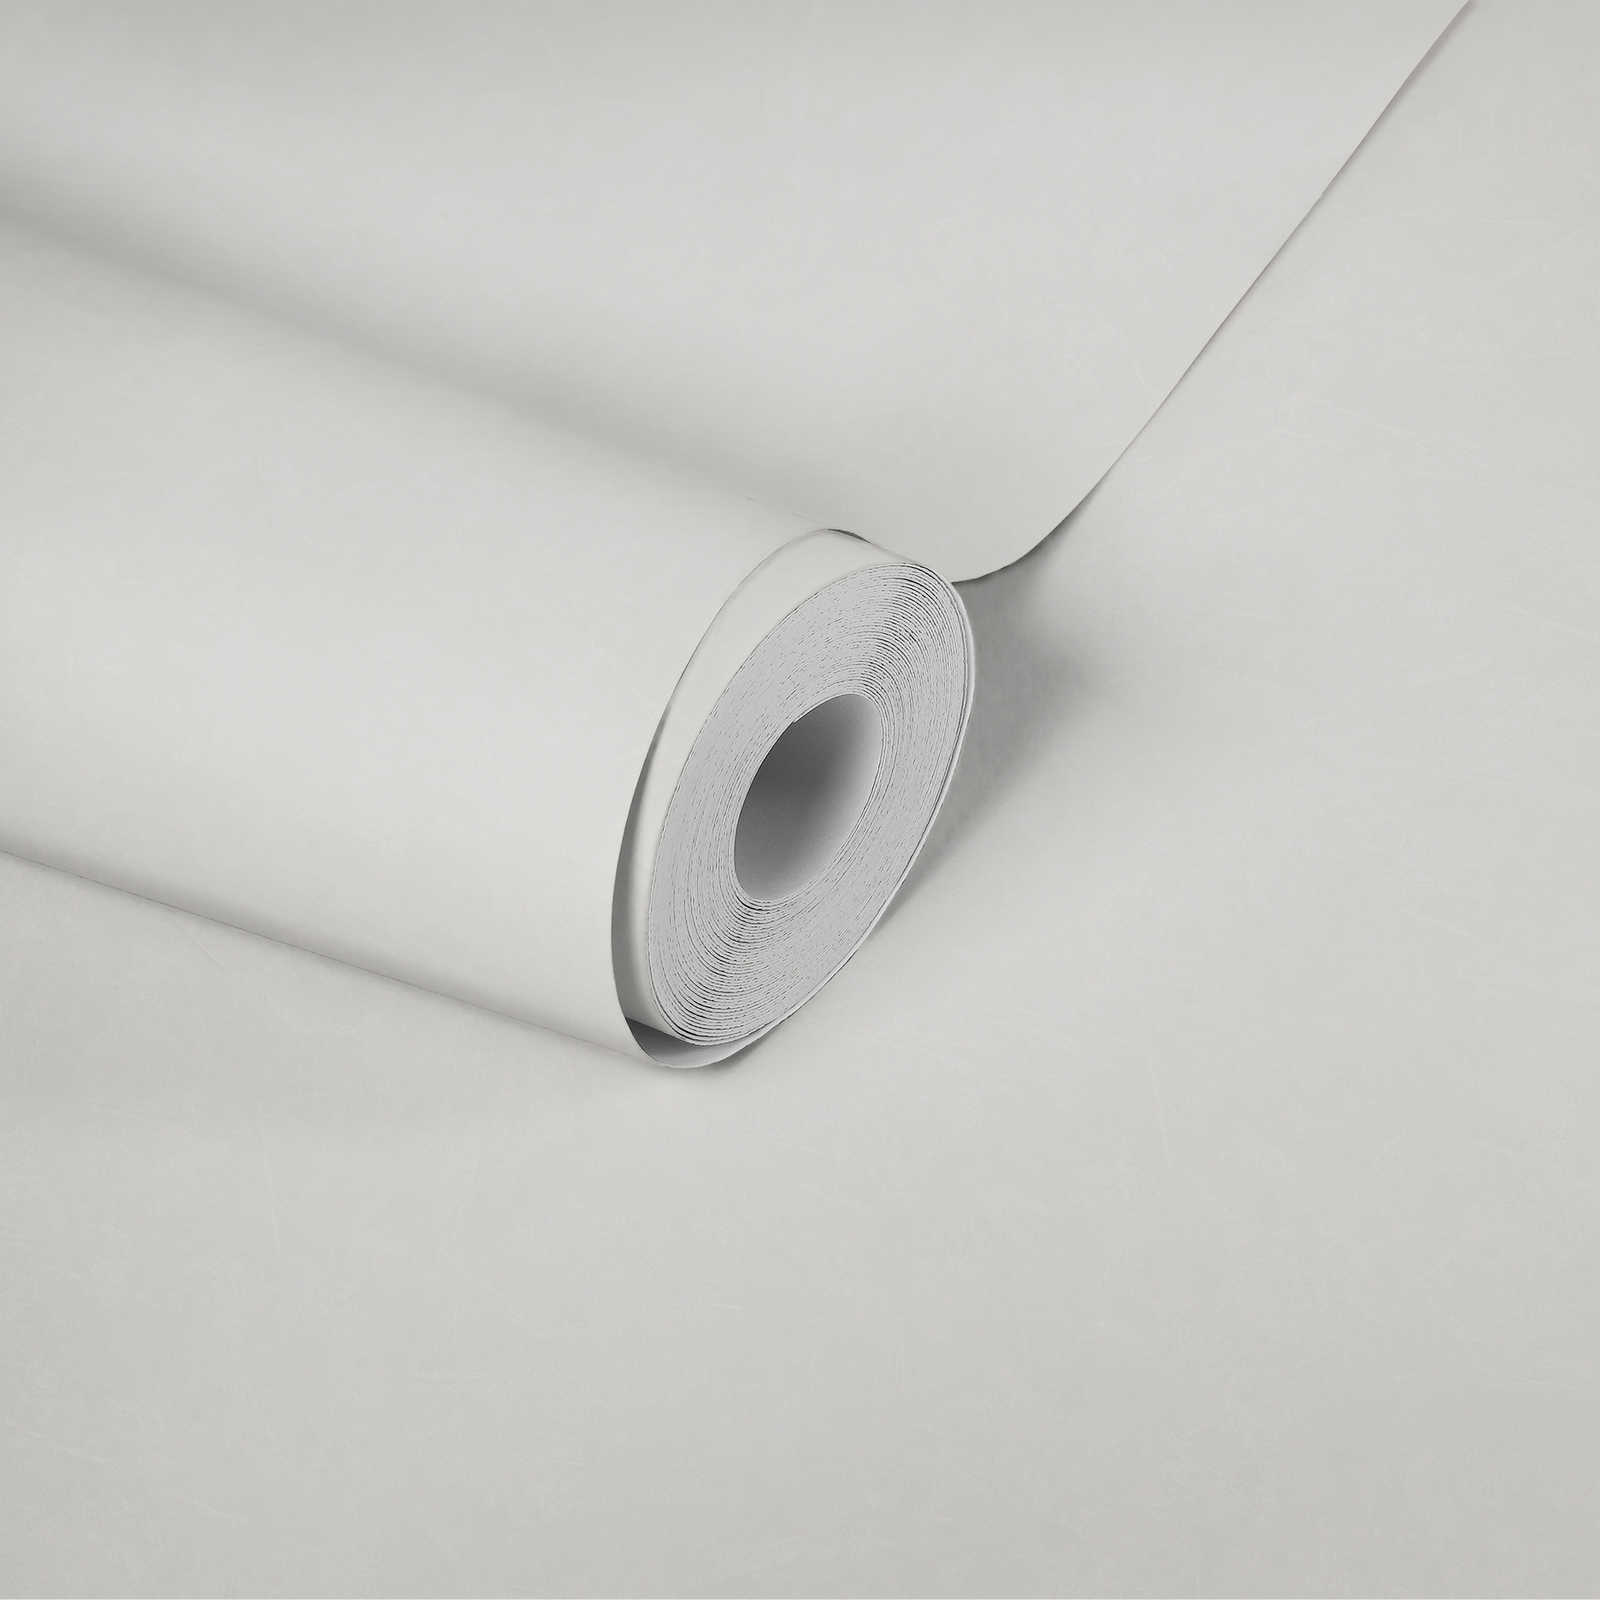             Plaster wallpaper plain with texture pattern - cream, white
        